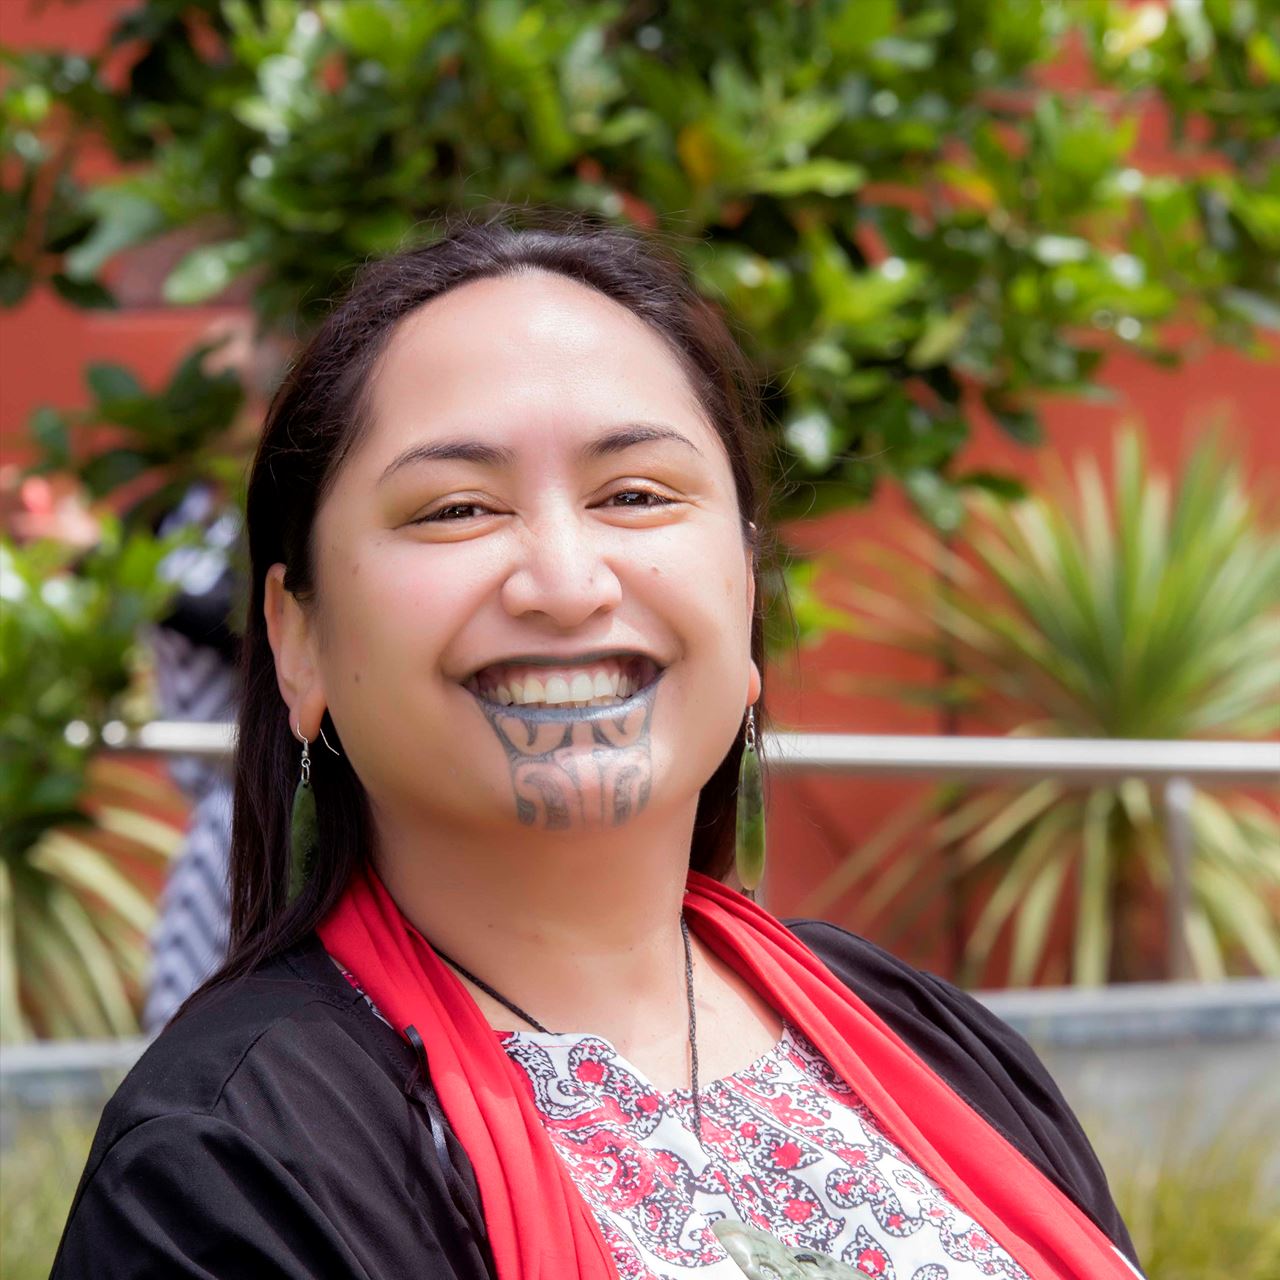 Naomi Herewini-Houia is lecturer in the School of Indigenous Graduate Studies